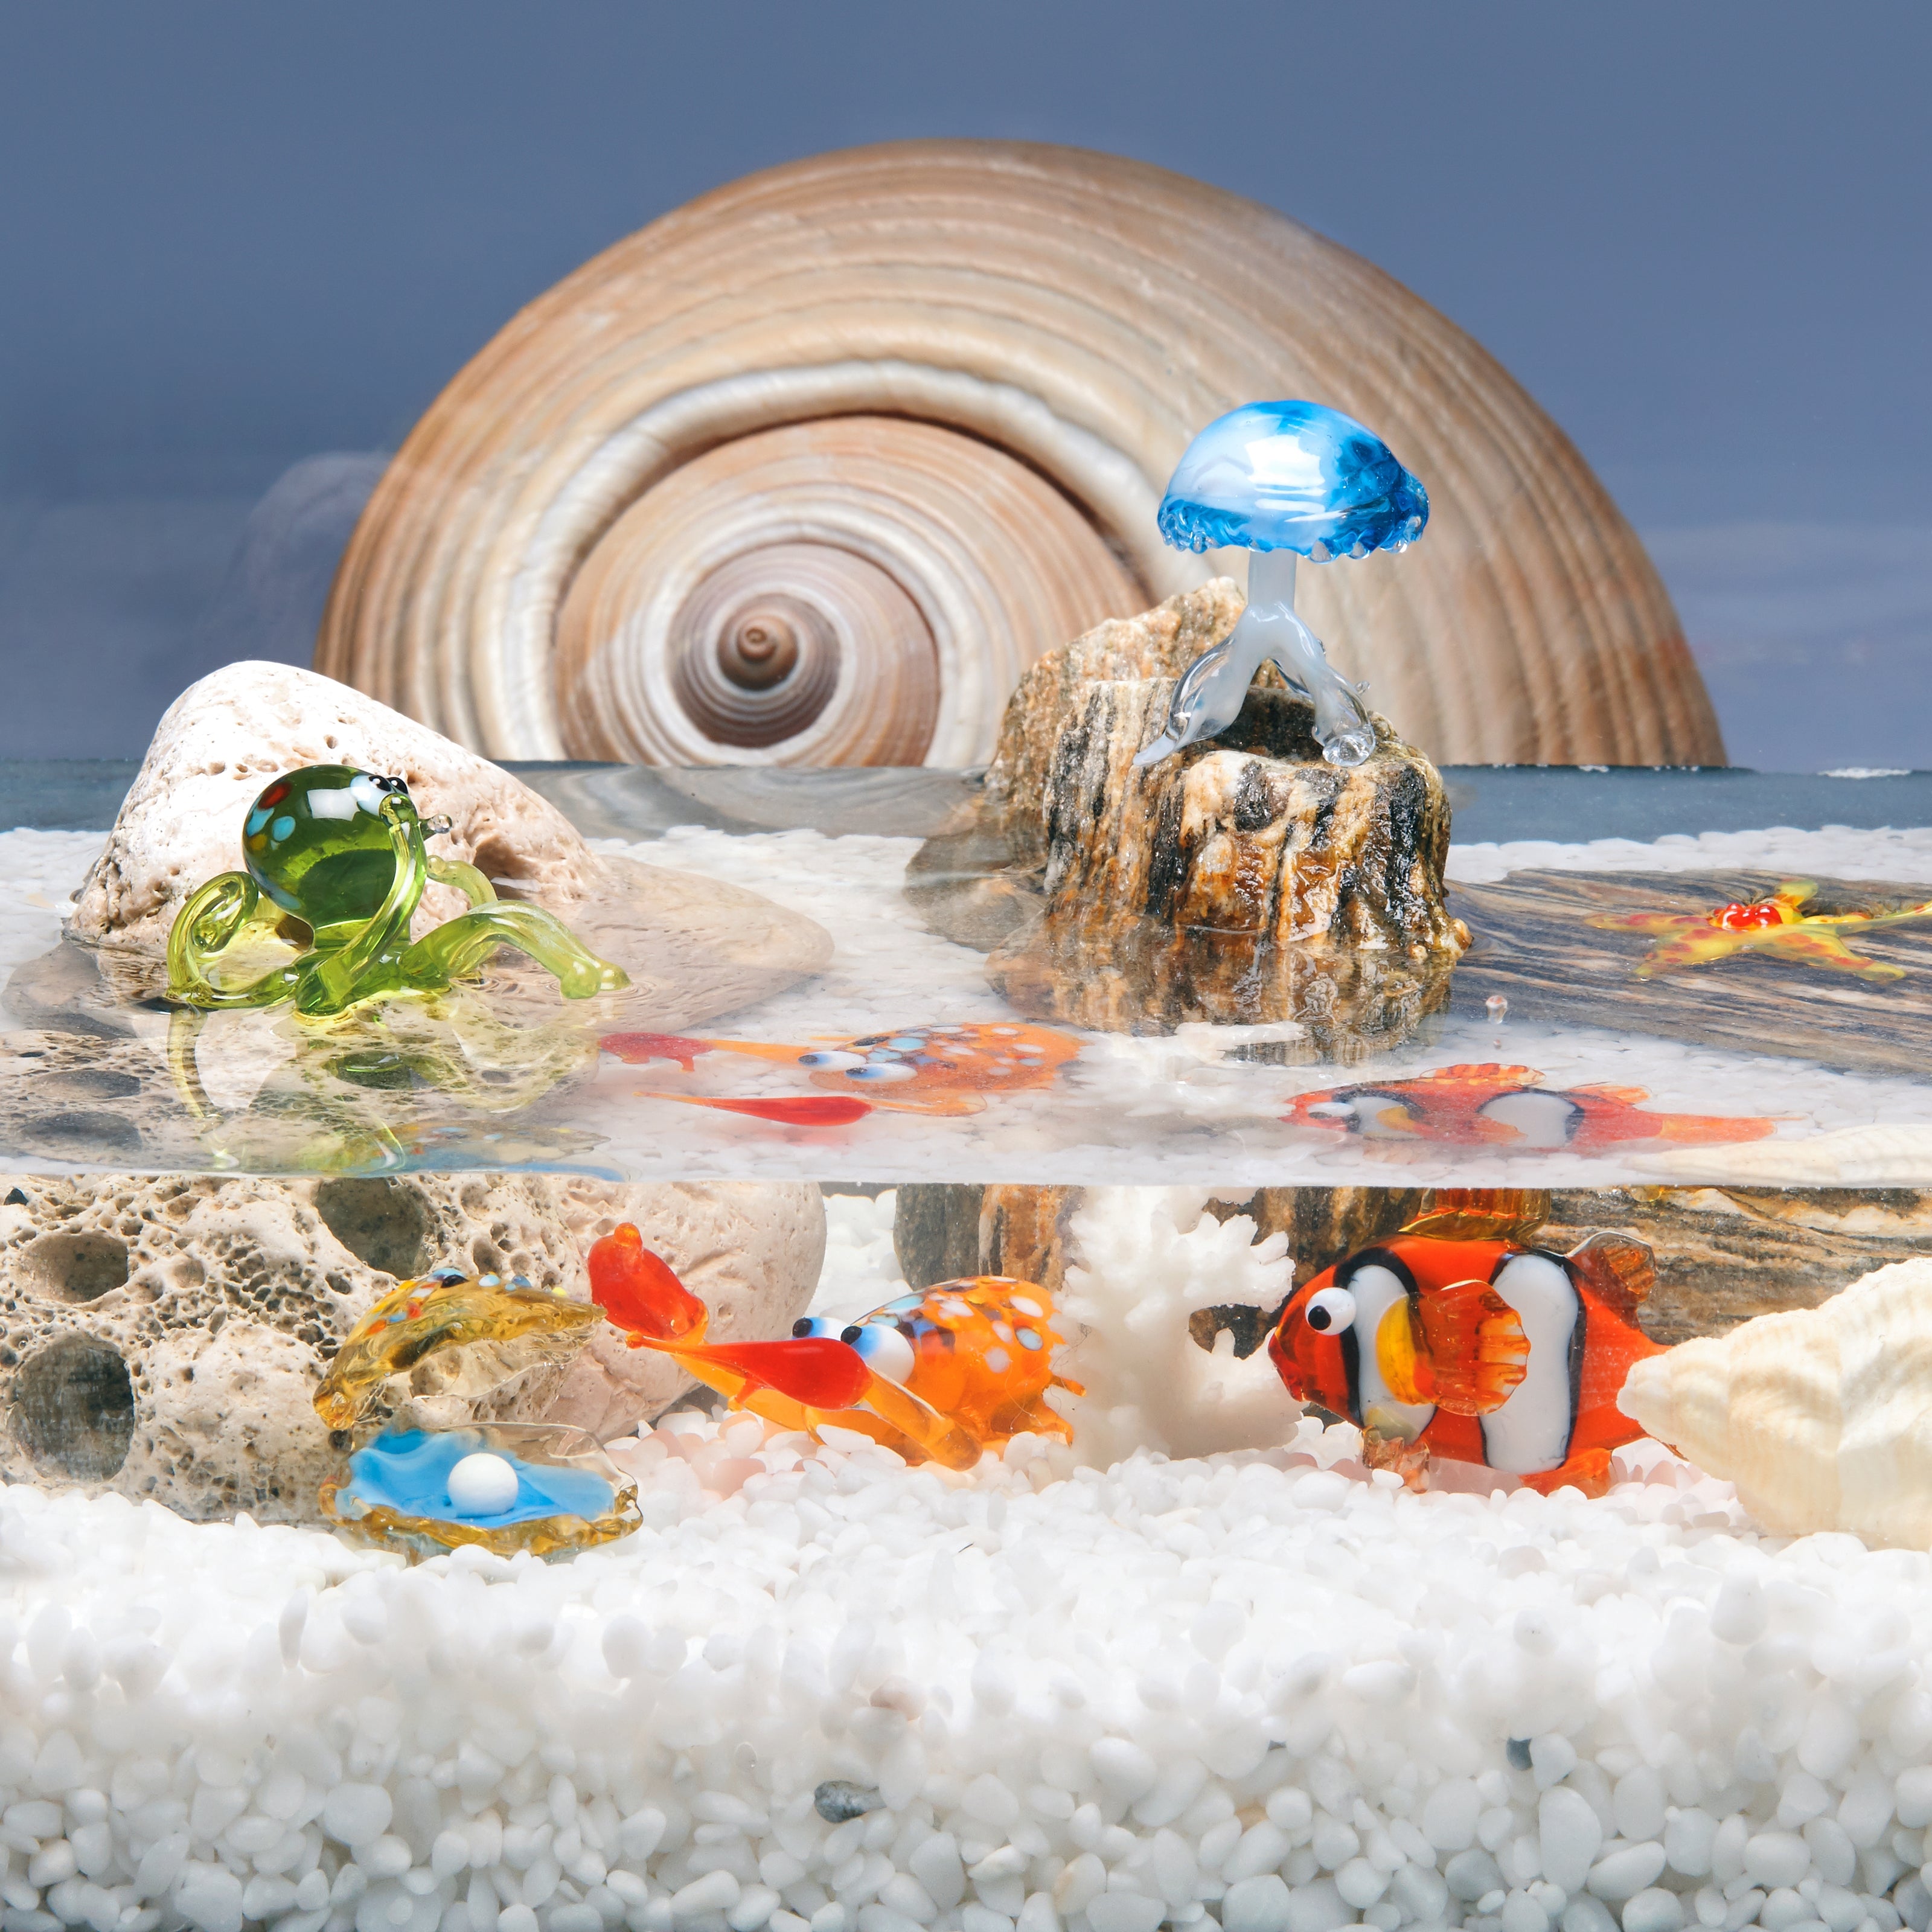 Aquarium Decorations Glass Figurines - Handmade Glass Blowing Colorful Water Animal Figure Fish Tank Ornaments